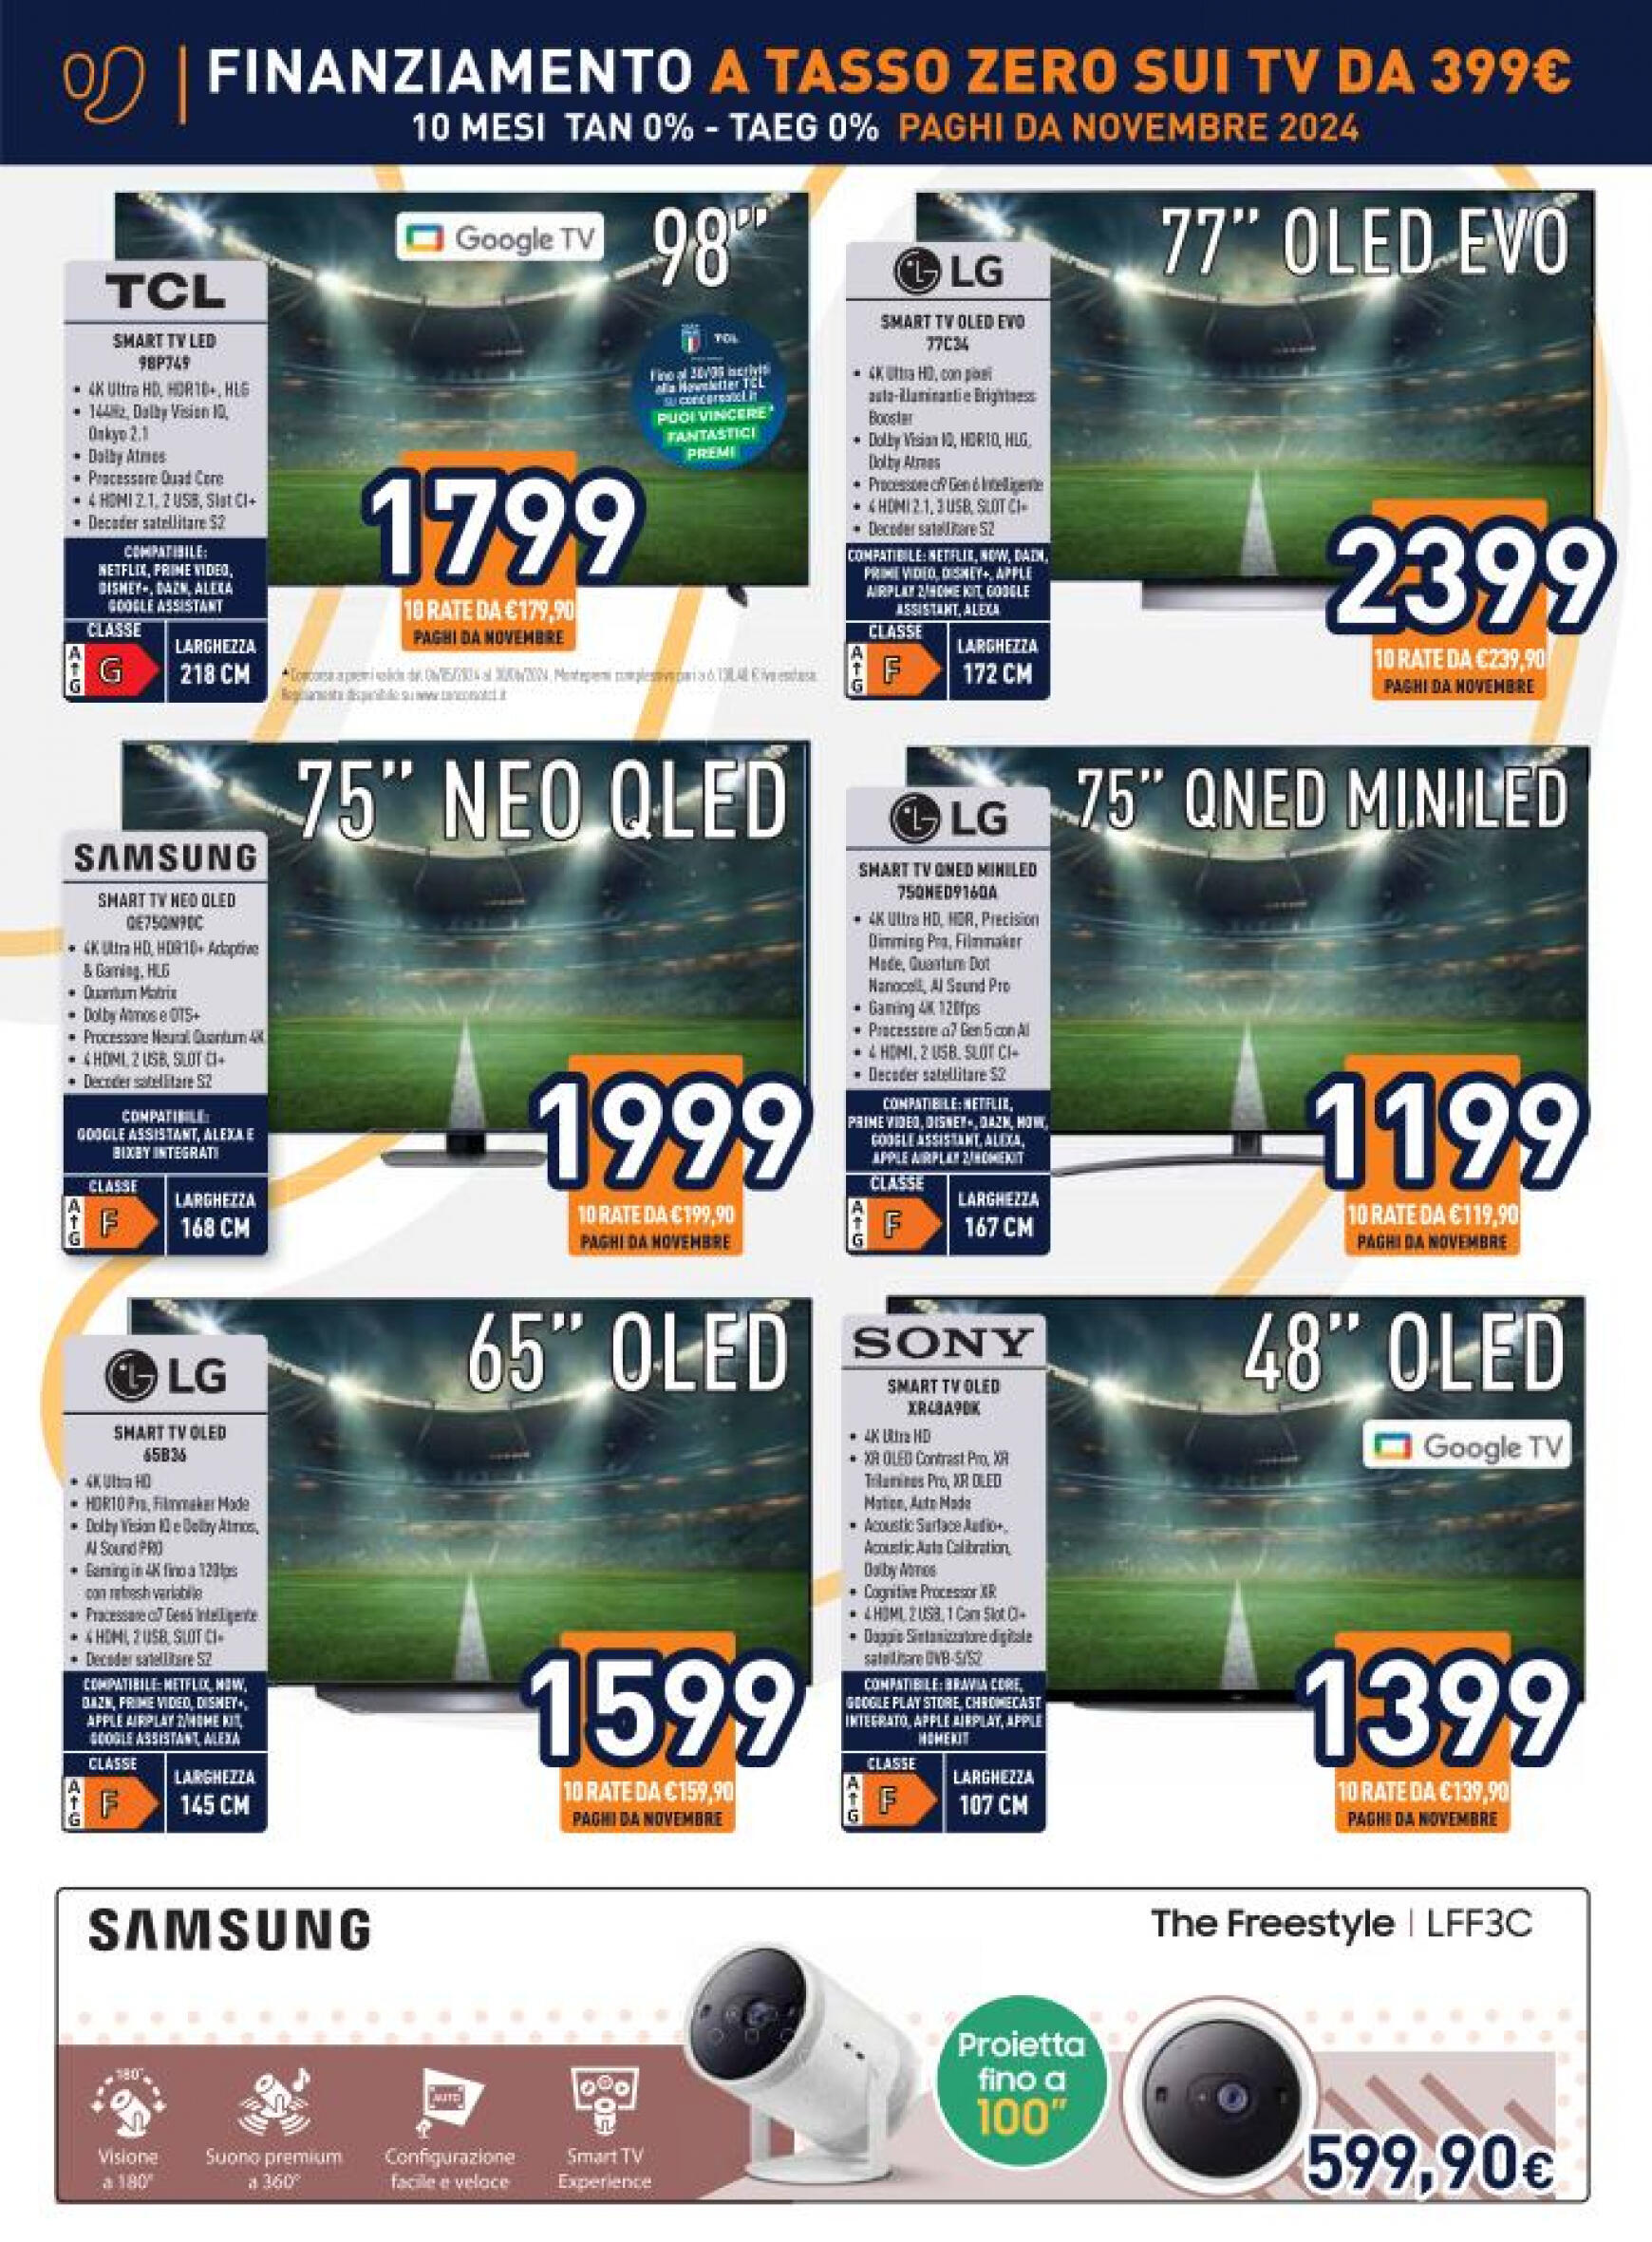 unieuro - Nuovo volantino Unieuro - Speciale Samsung Tablet 30.05. - 12.06. - page: 2